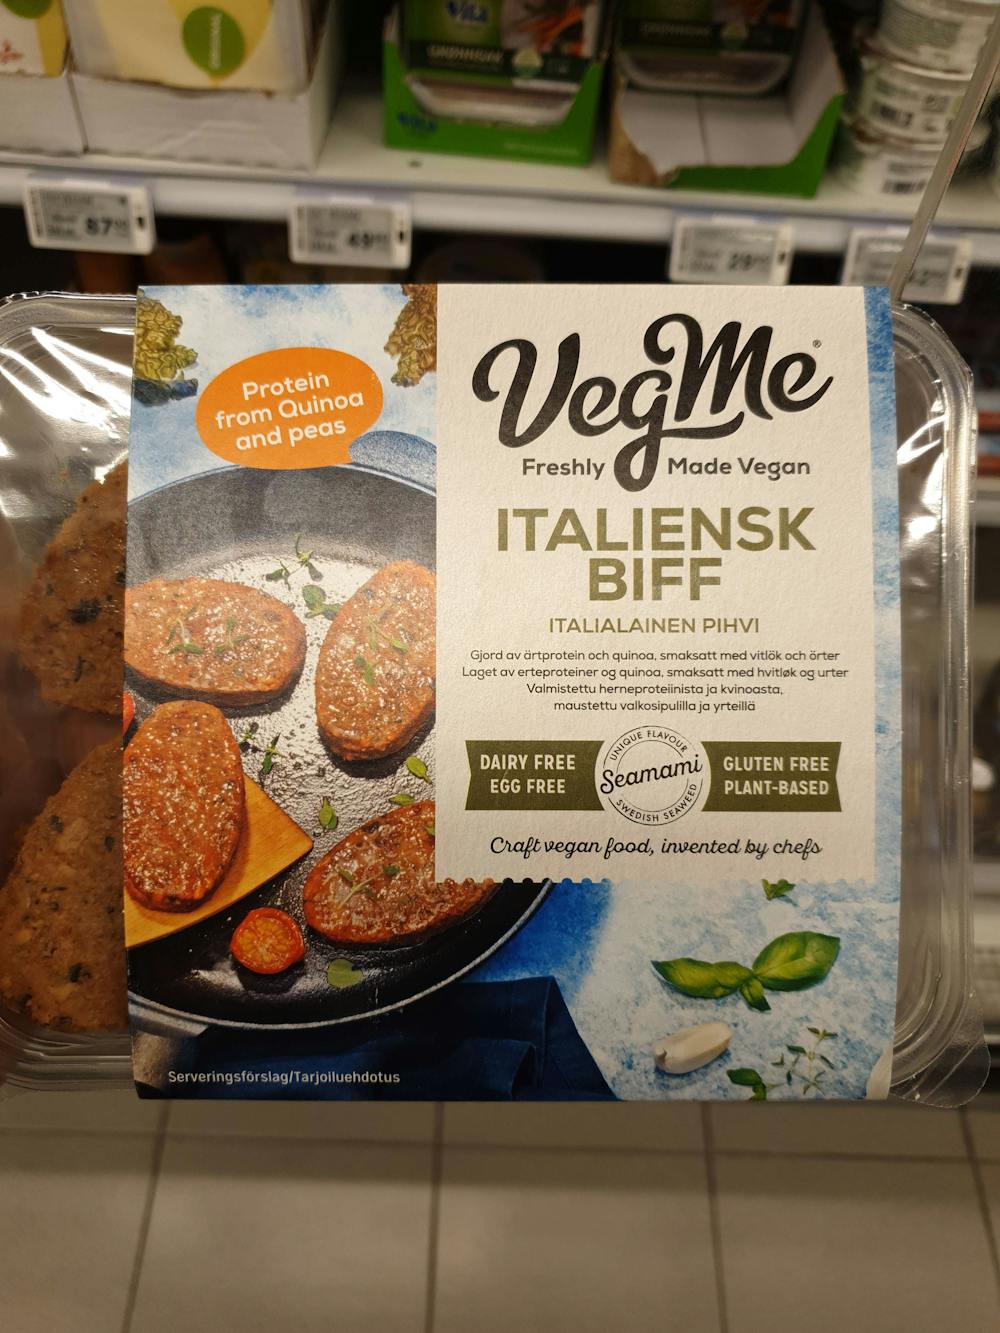 Italiensk biff, VegMe